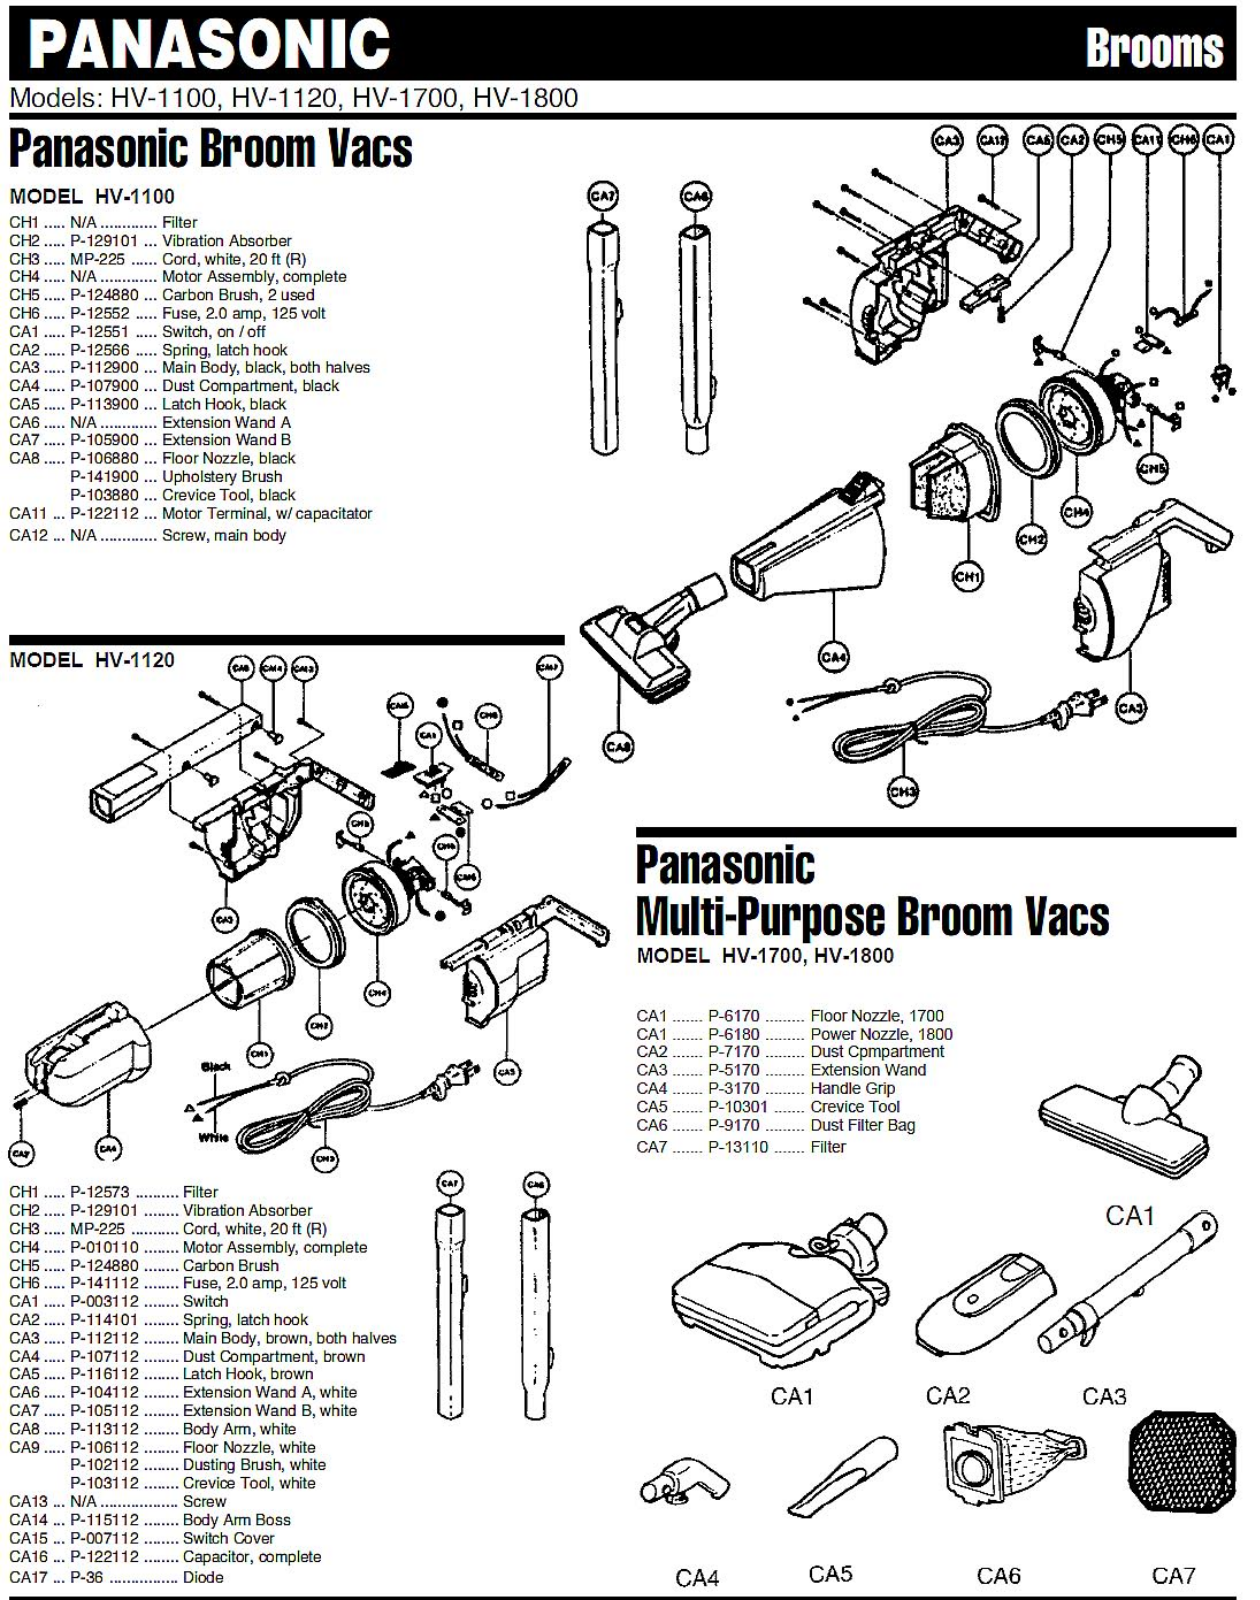 Panasonic Hv-1120 Parts List